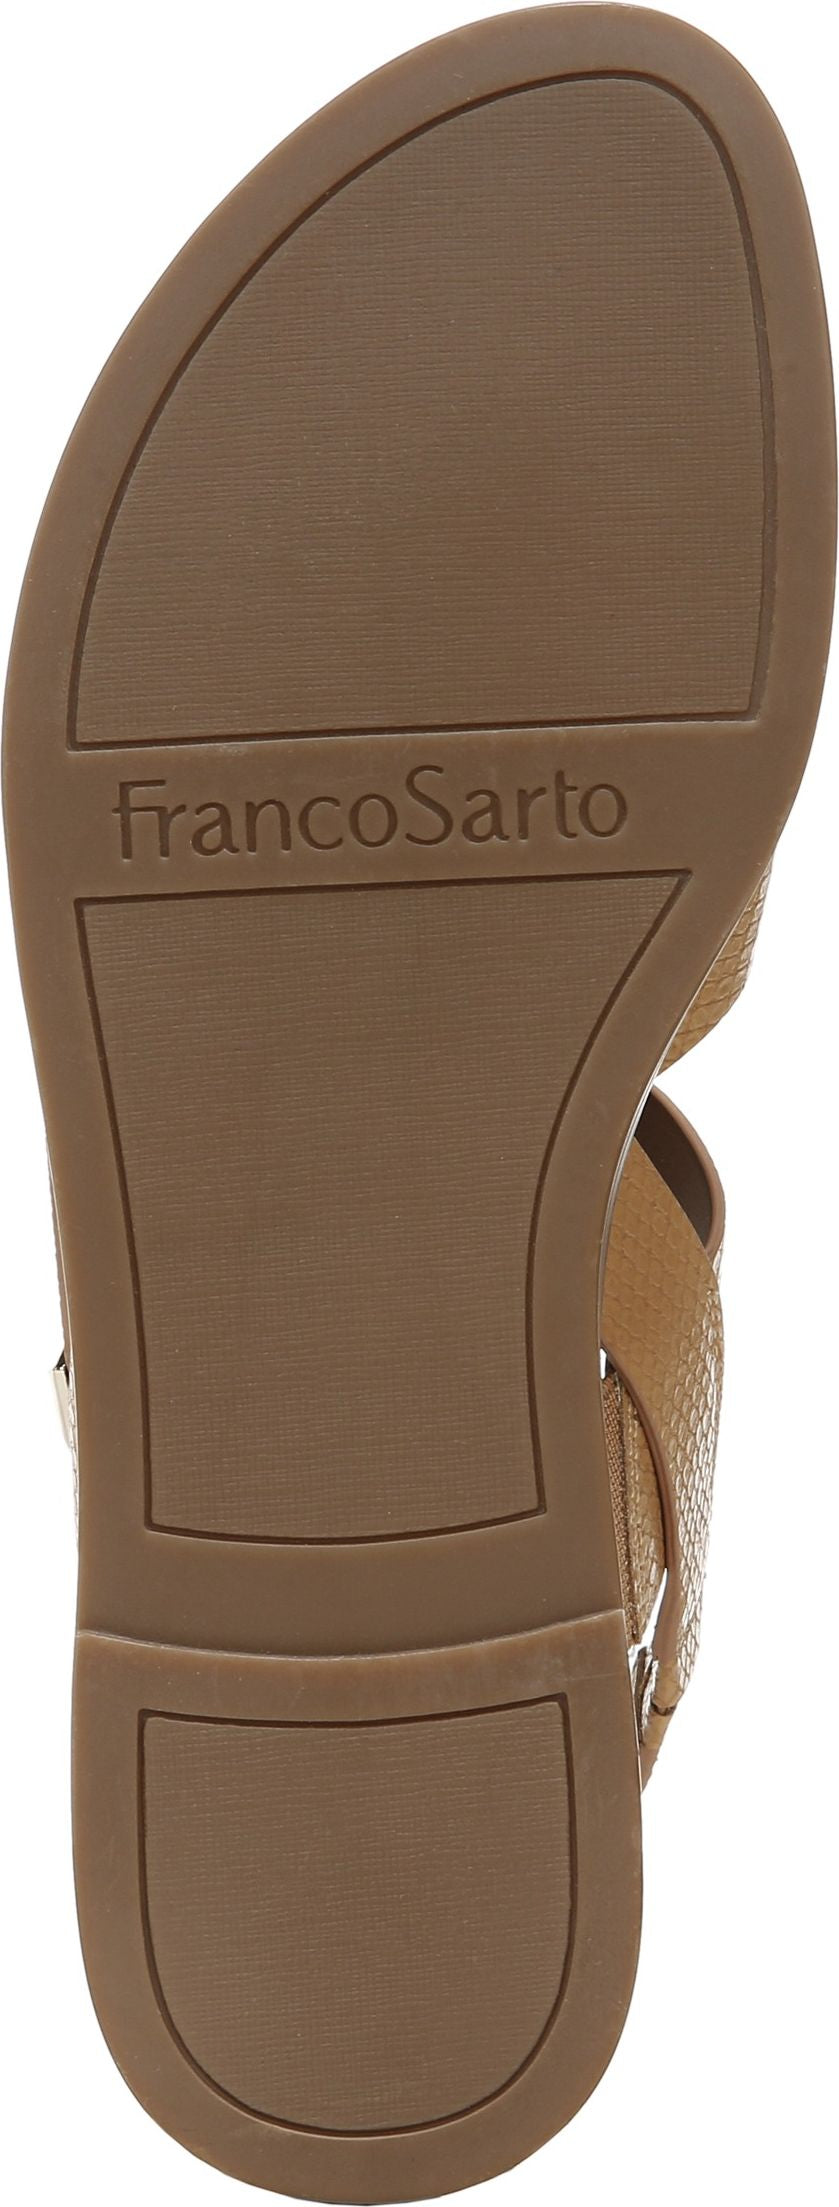 Franco Sarto Sandals Gans Camel